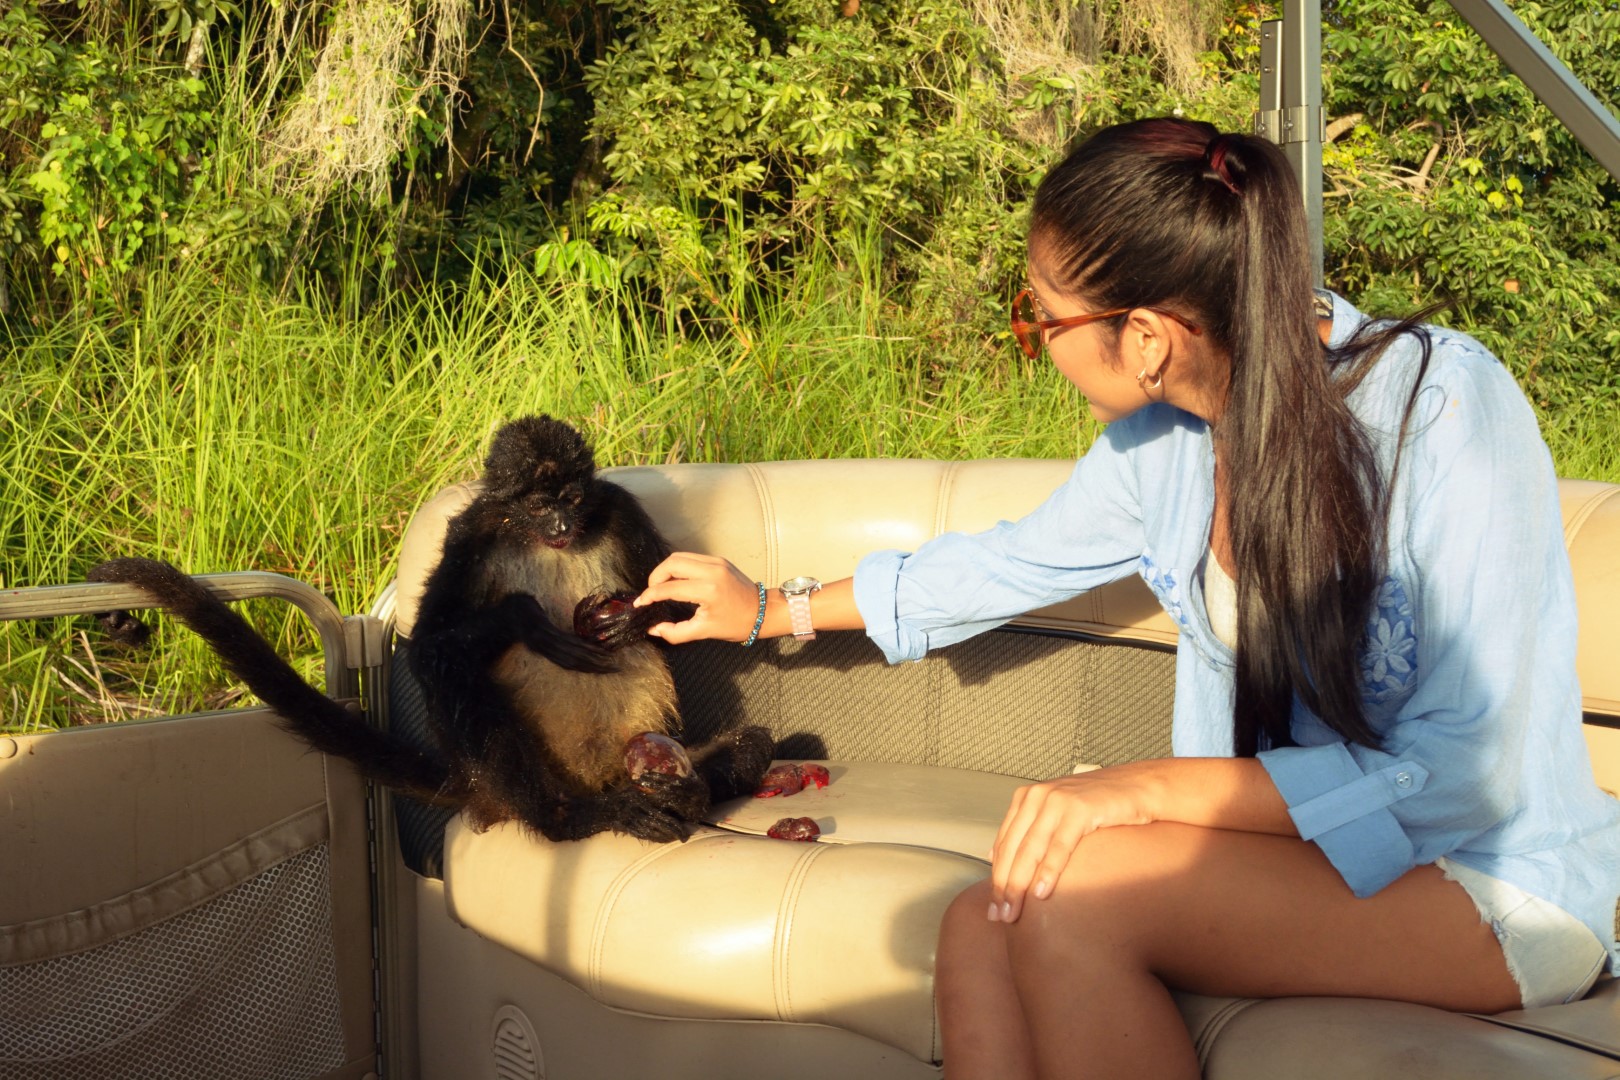 Monkey on boat at Hotel Las Lagunas, Guatemala